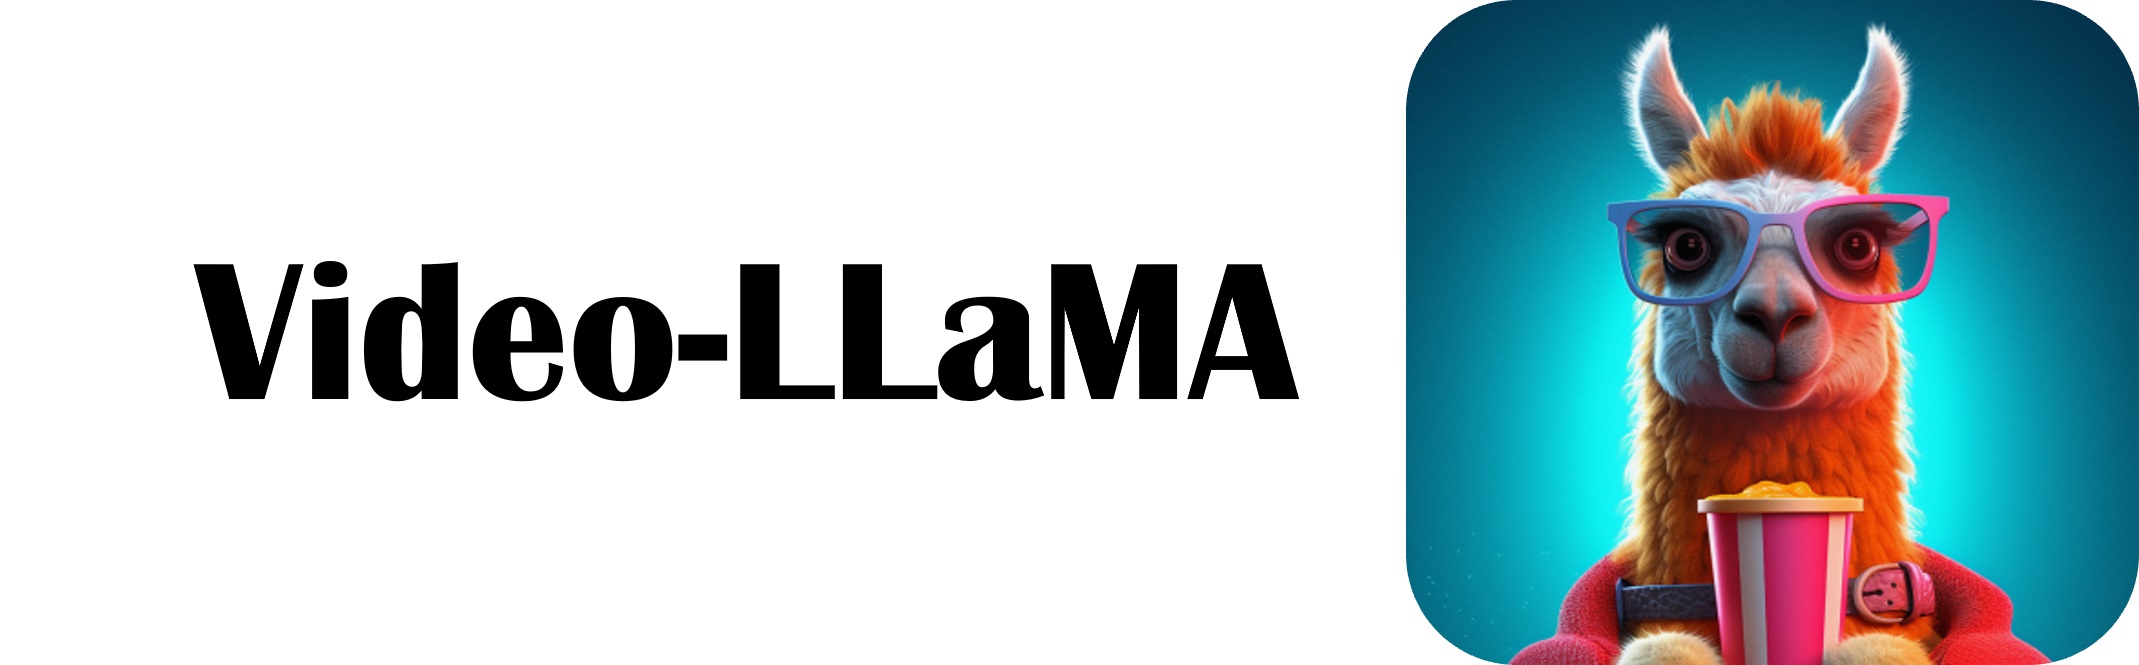 video_llama_logo.jpg